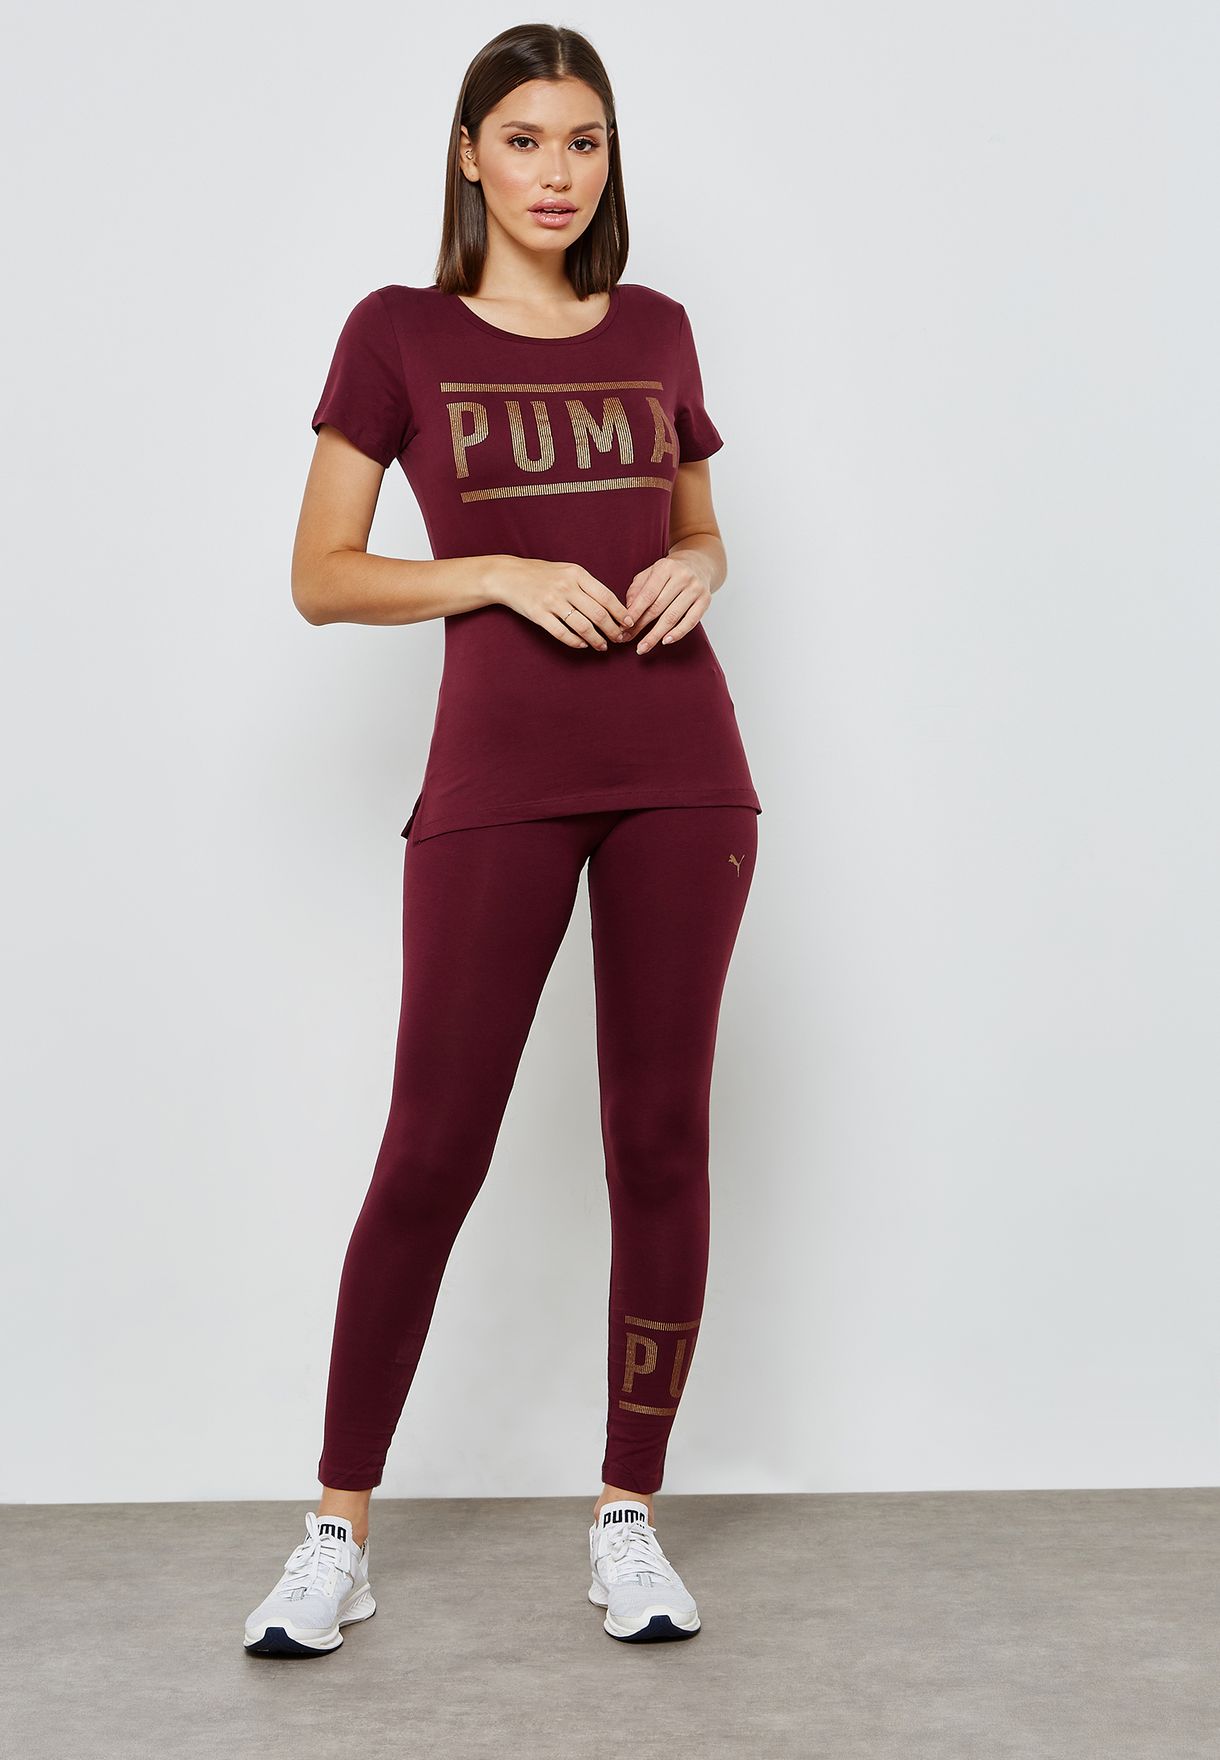 burgundy puma leggings